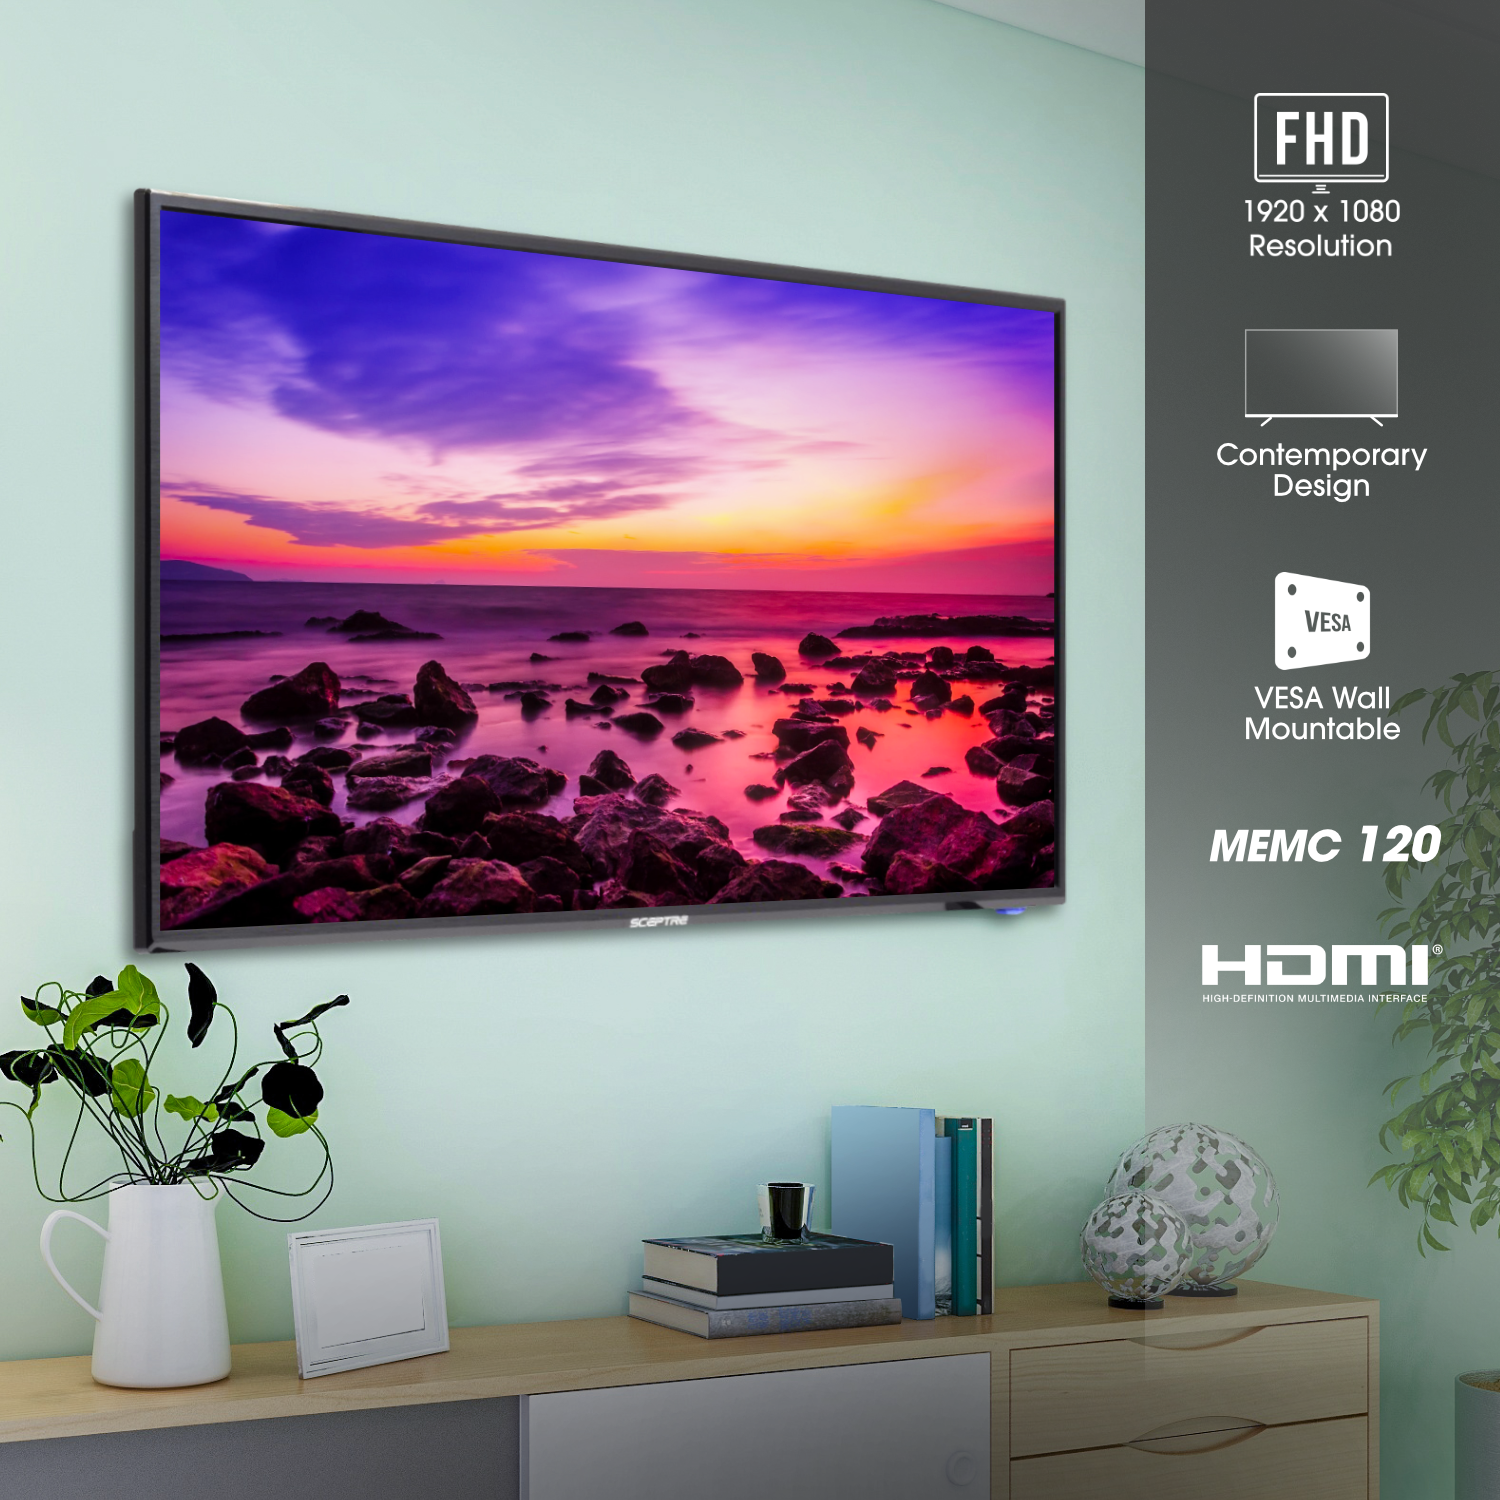 Sceptre 40" Class FHD (1080P) LED TV (X405BV-FSR) - image 2 of 11